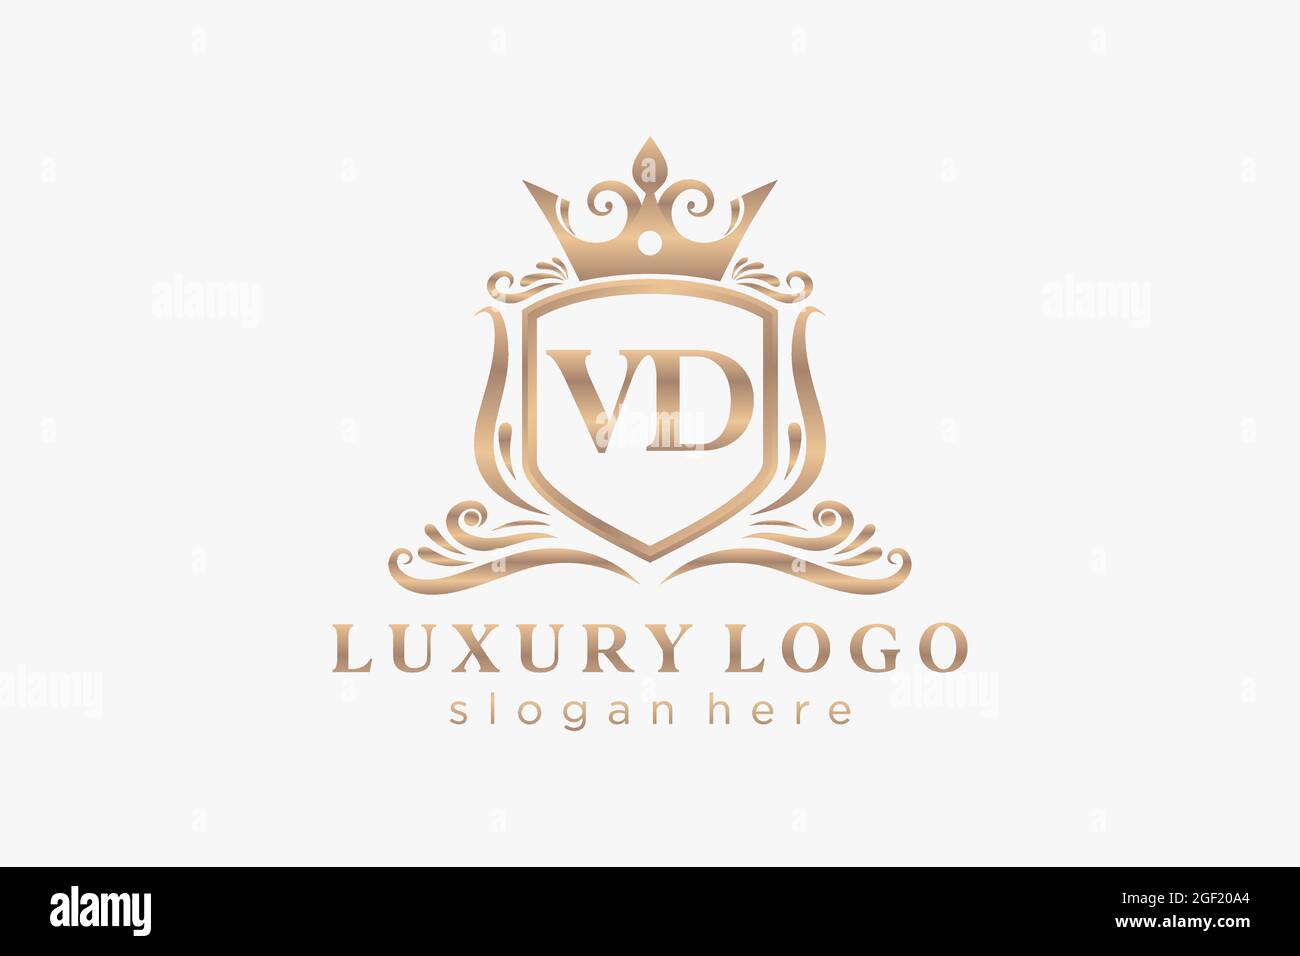 VD Letter Royal Luxury Logo Vorlage in Vektorgrafik für Restaurant, Royalty, Boutique, Cafe, Hotel, Heraldisch, Schmuck, Mode und andere Vektor illustrr Stock Vektor